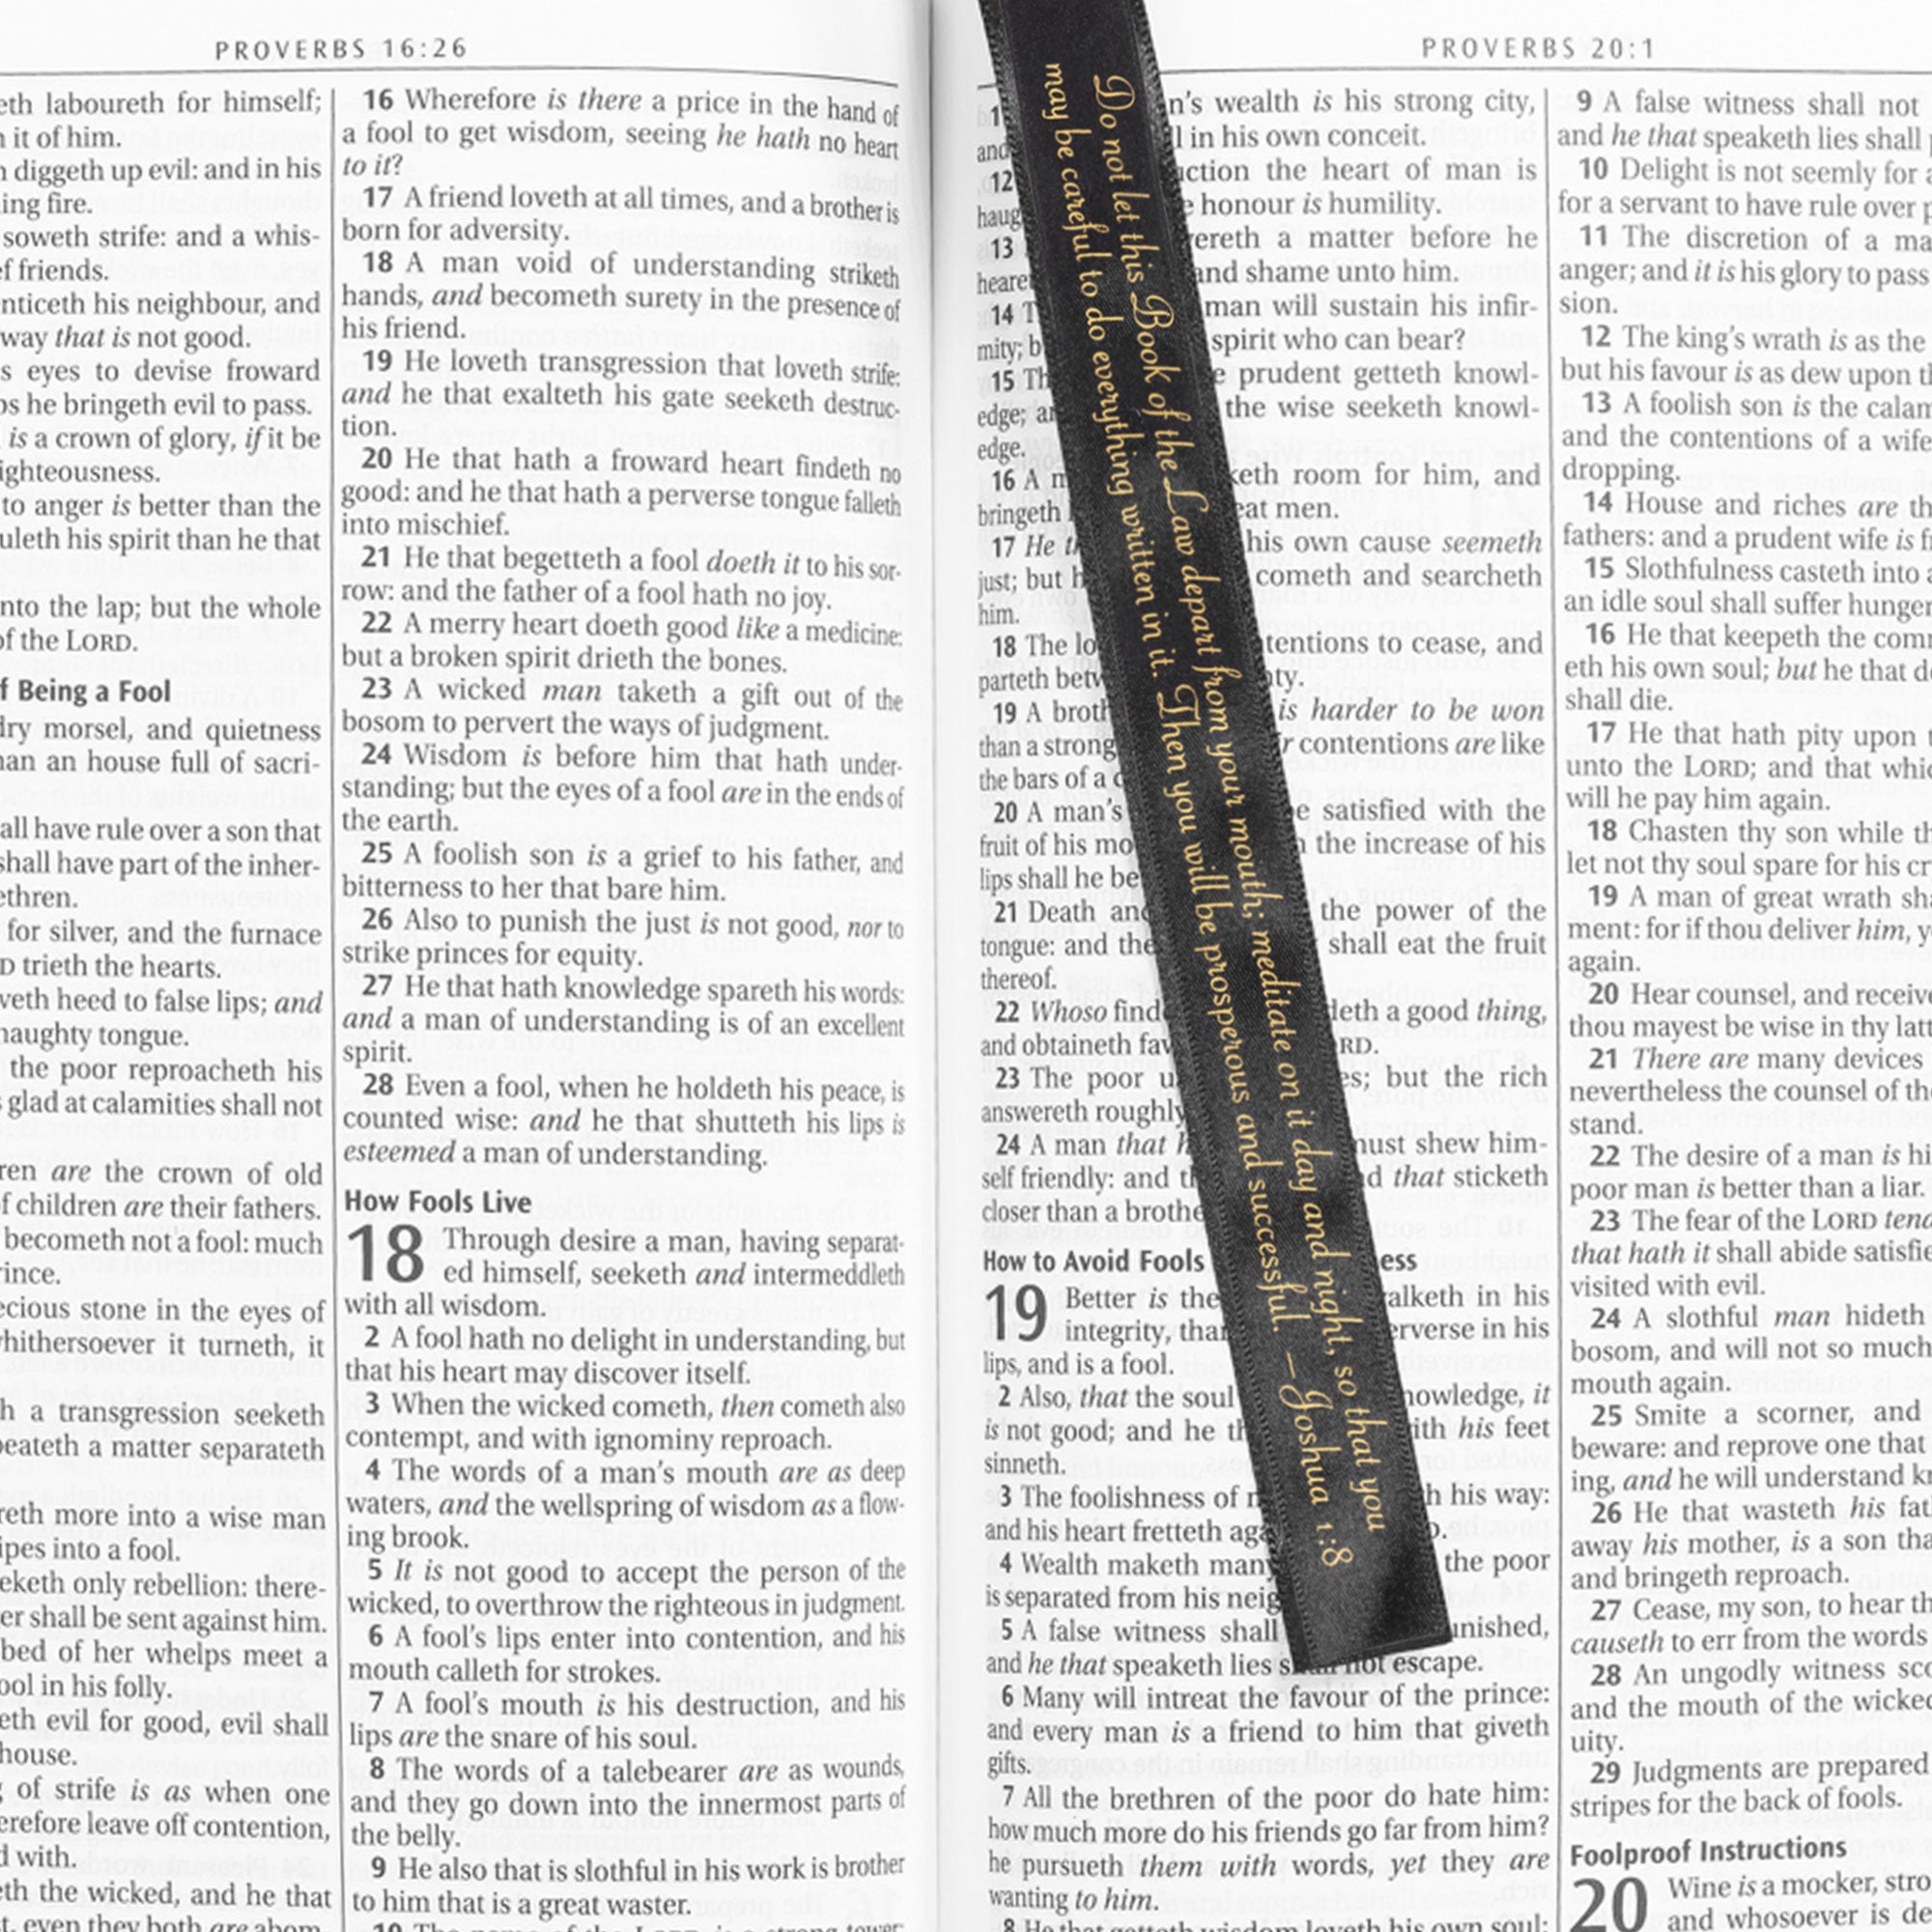 Divine Details: Bible Cover Brown & Gold - Deuteronomy